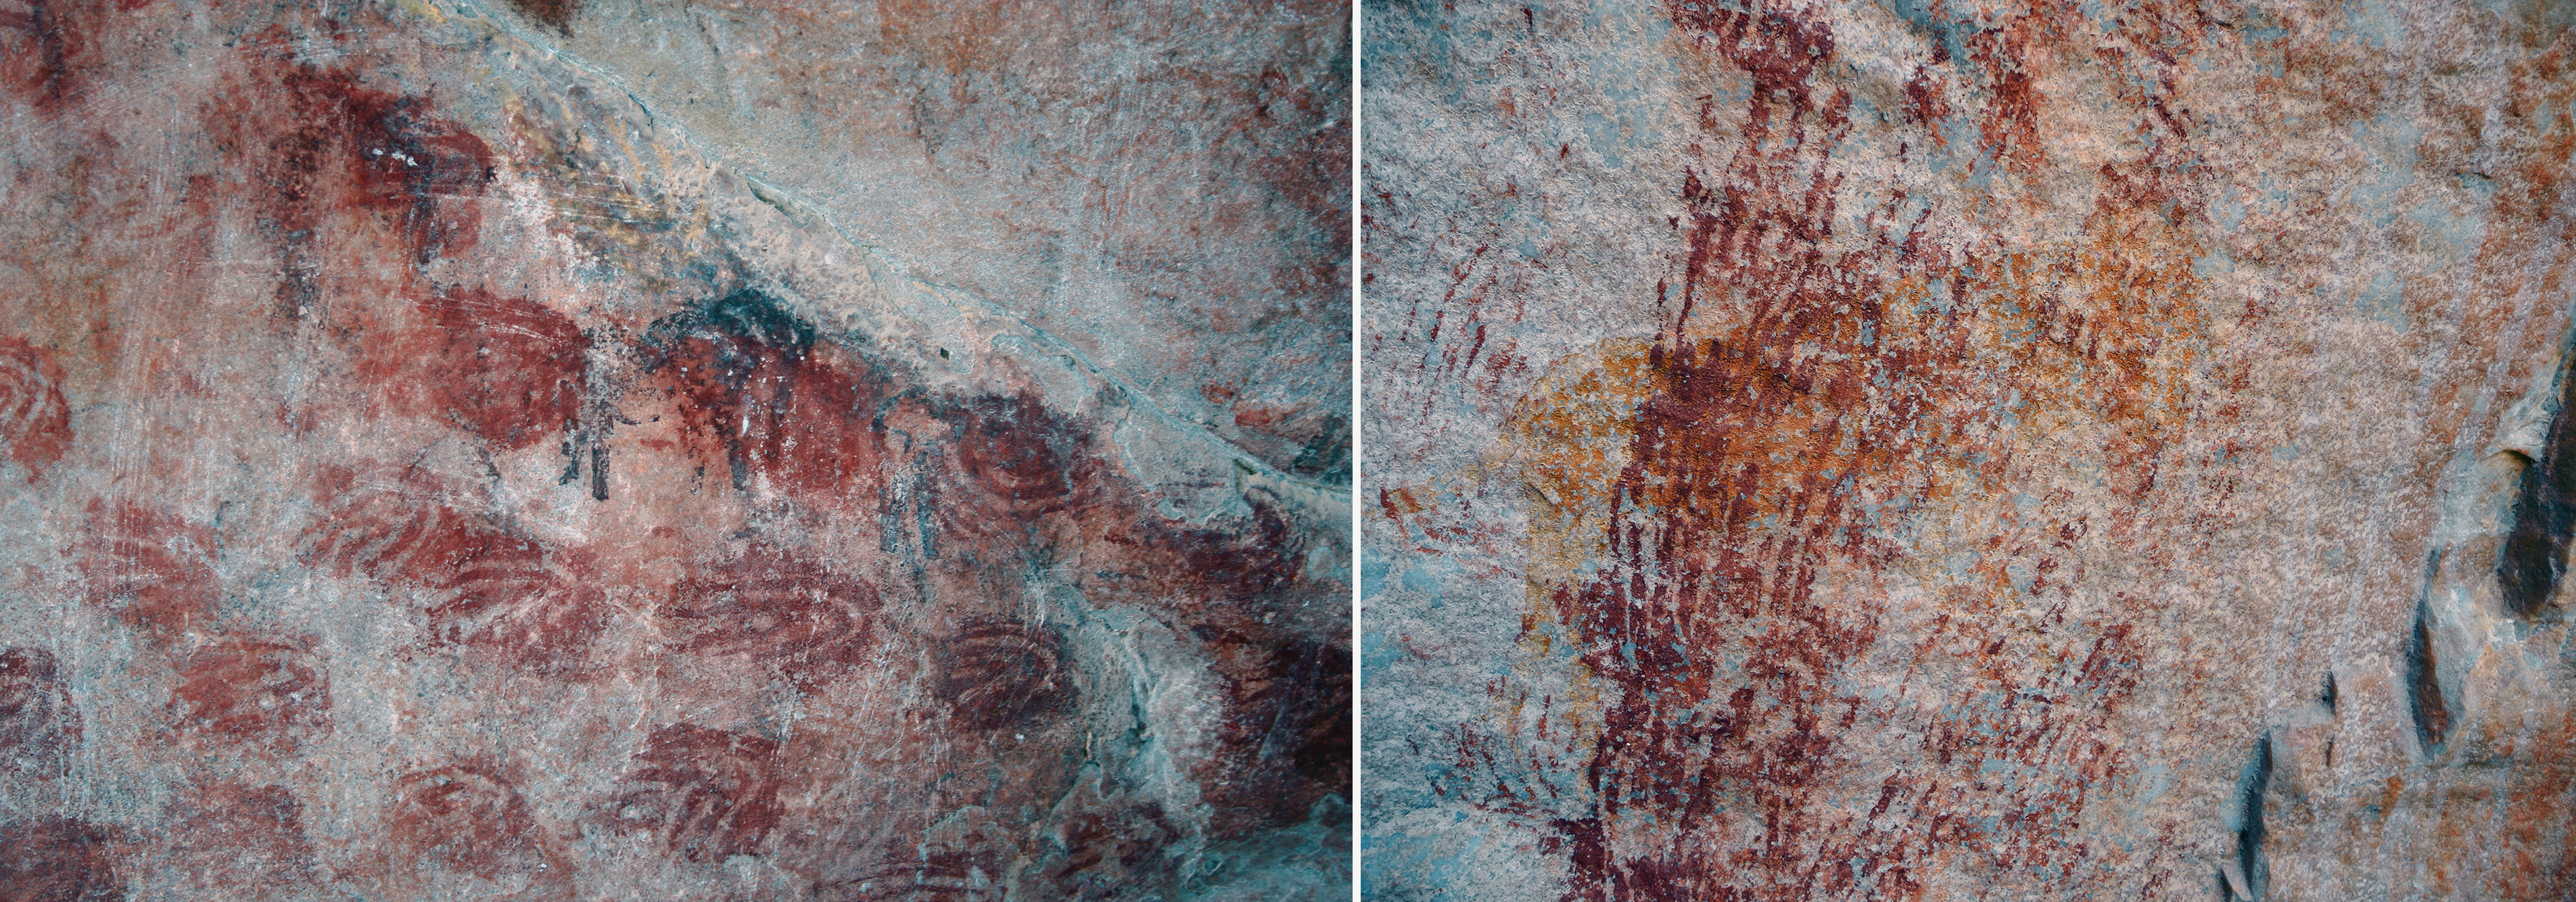 Rock Art Handprints Elands Bay Cave Fingers Superimposed Feline Swartkop Ceres Karoo Archaeology South Africa